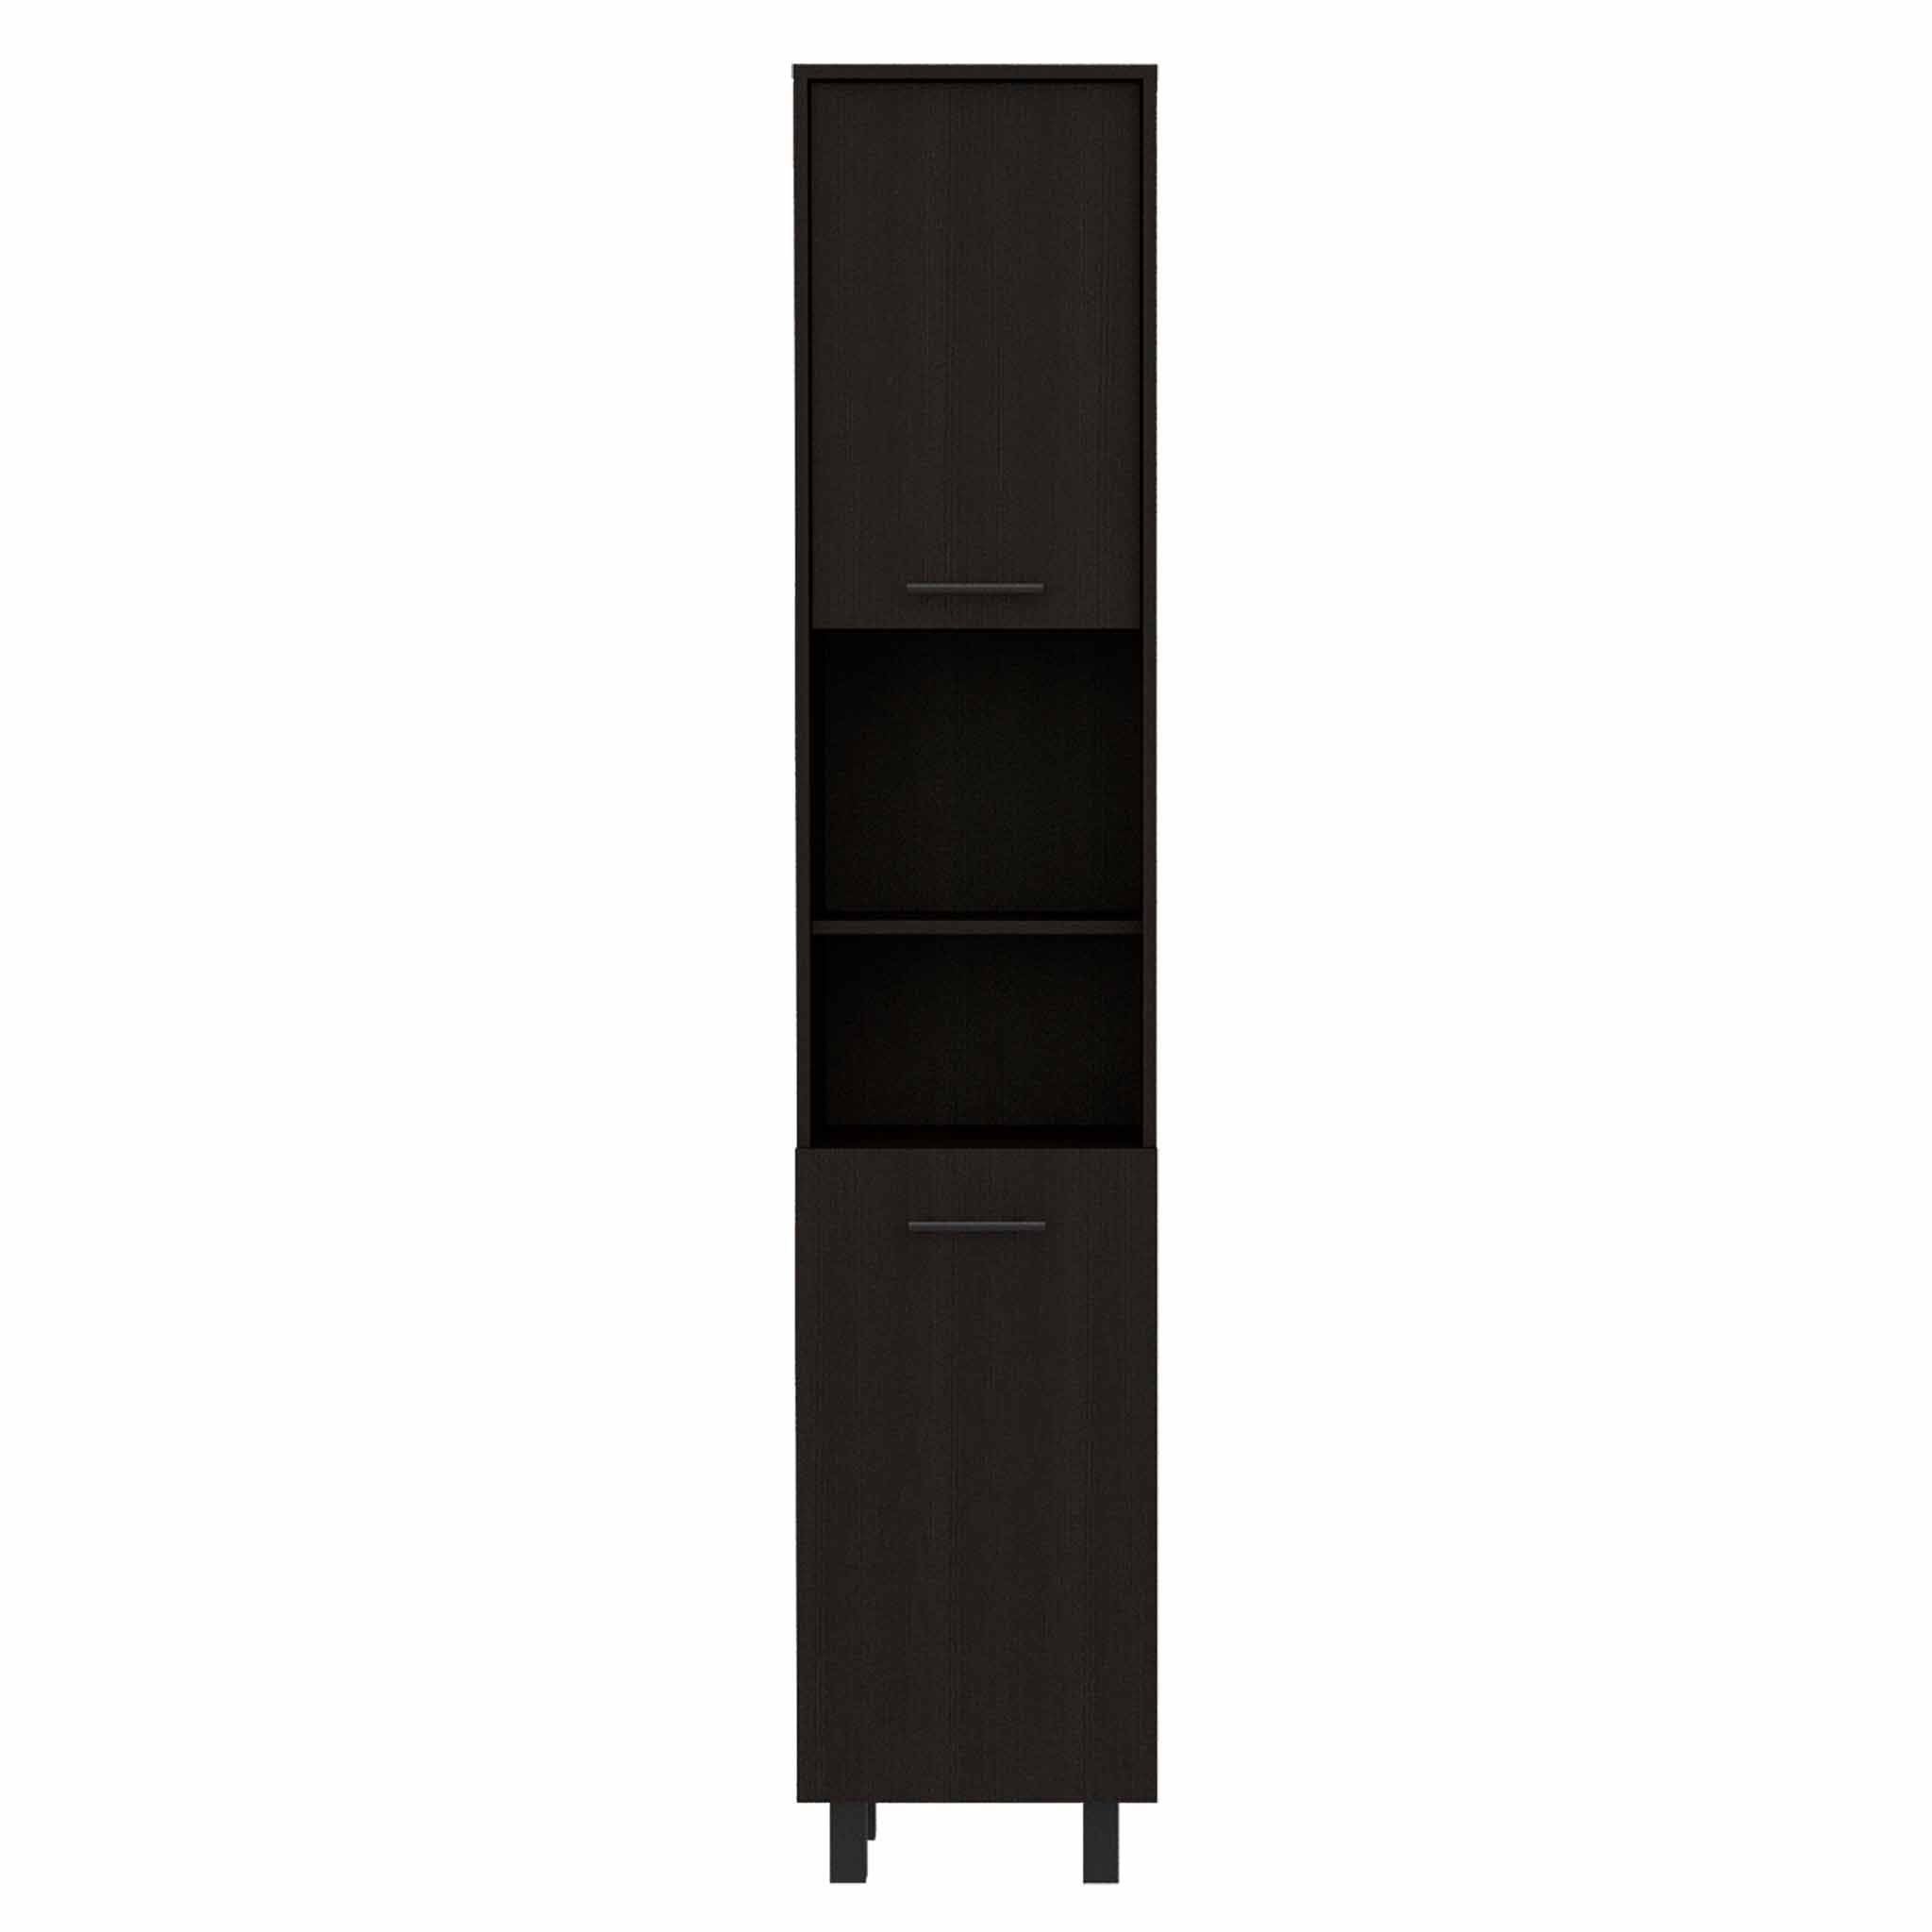 Modern Sleek And Tall Pantry Cabinet - Black